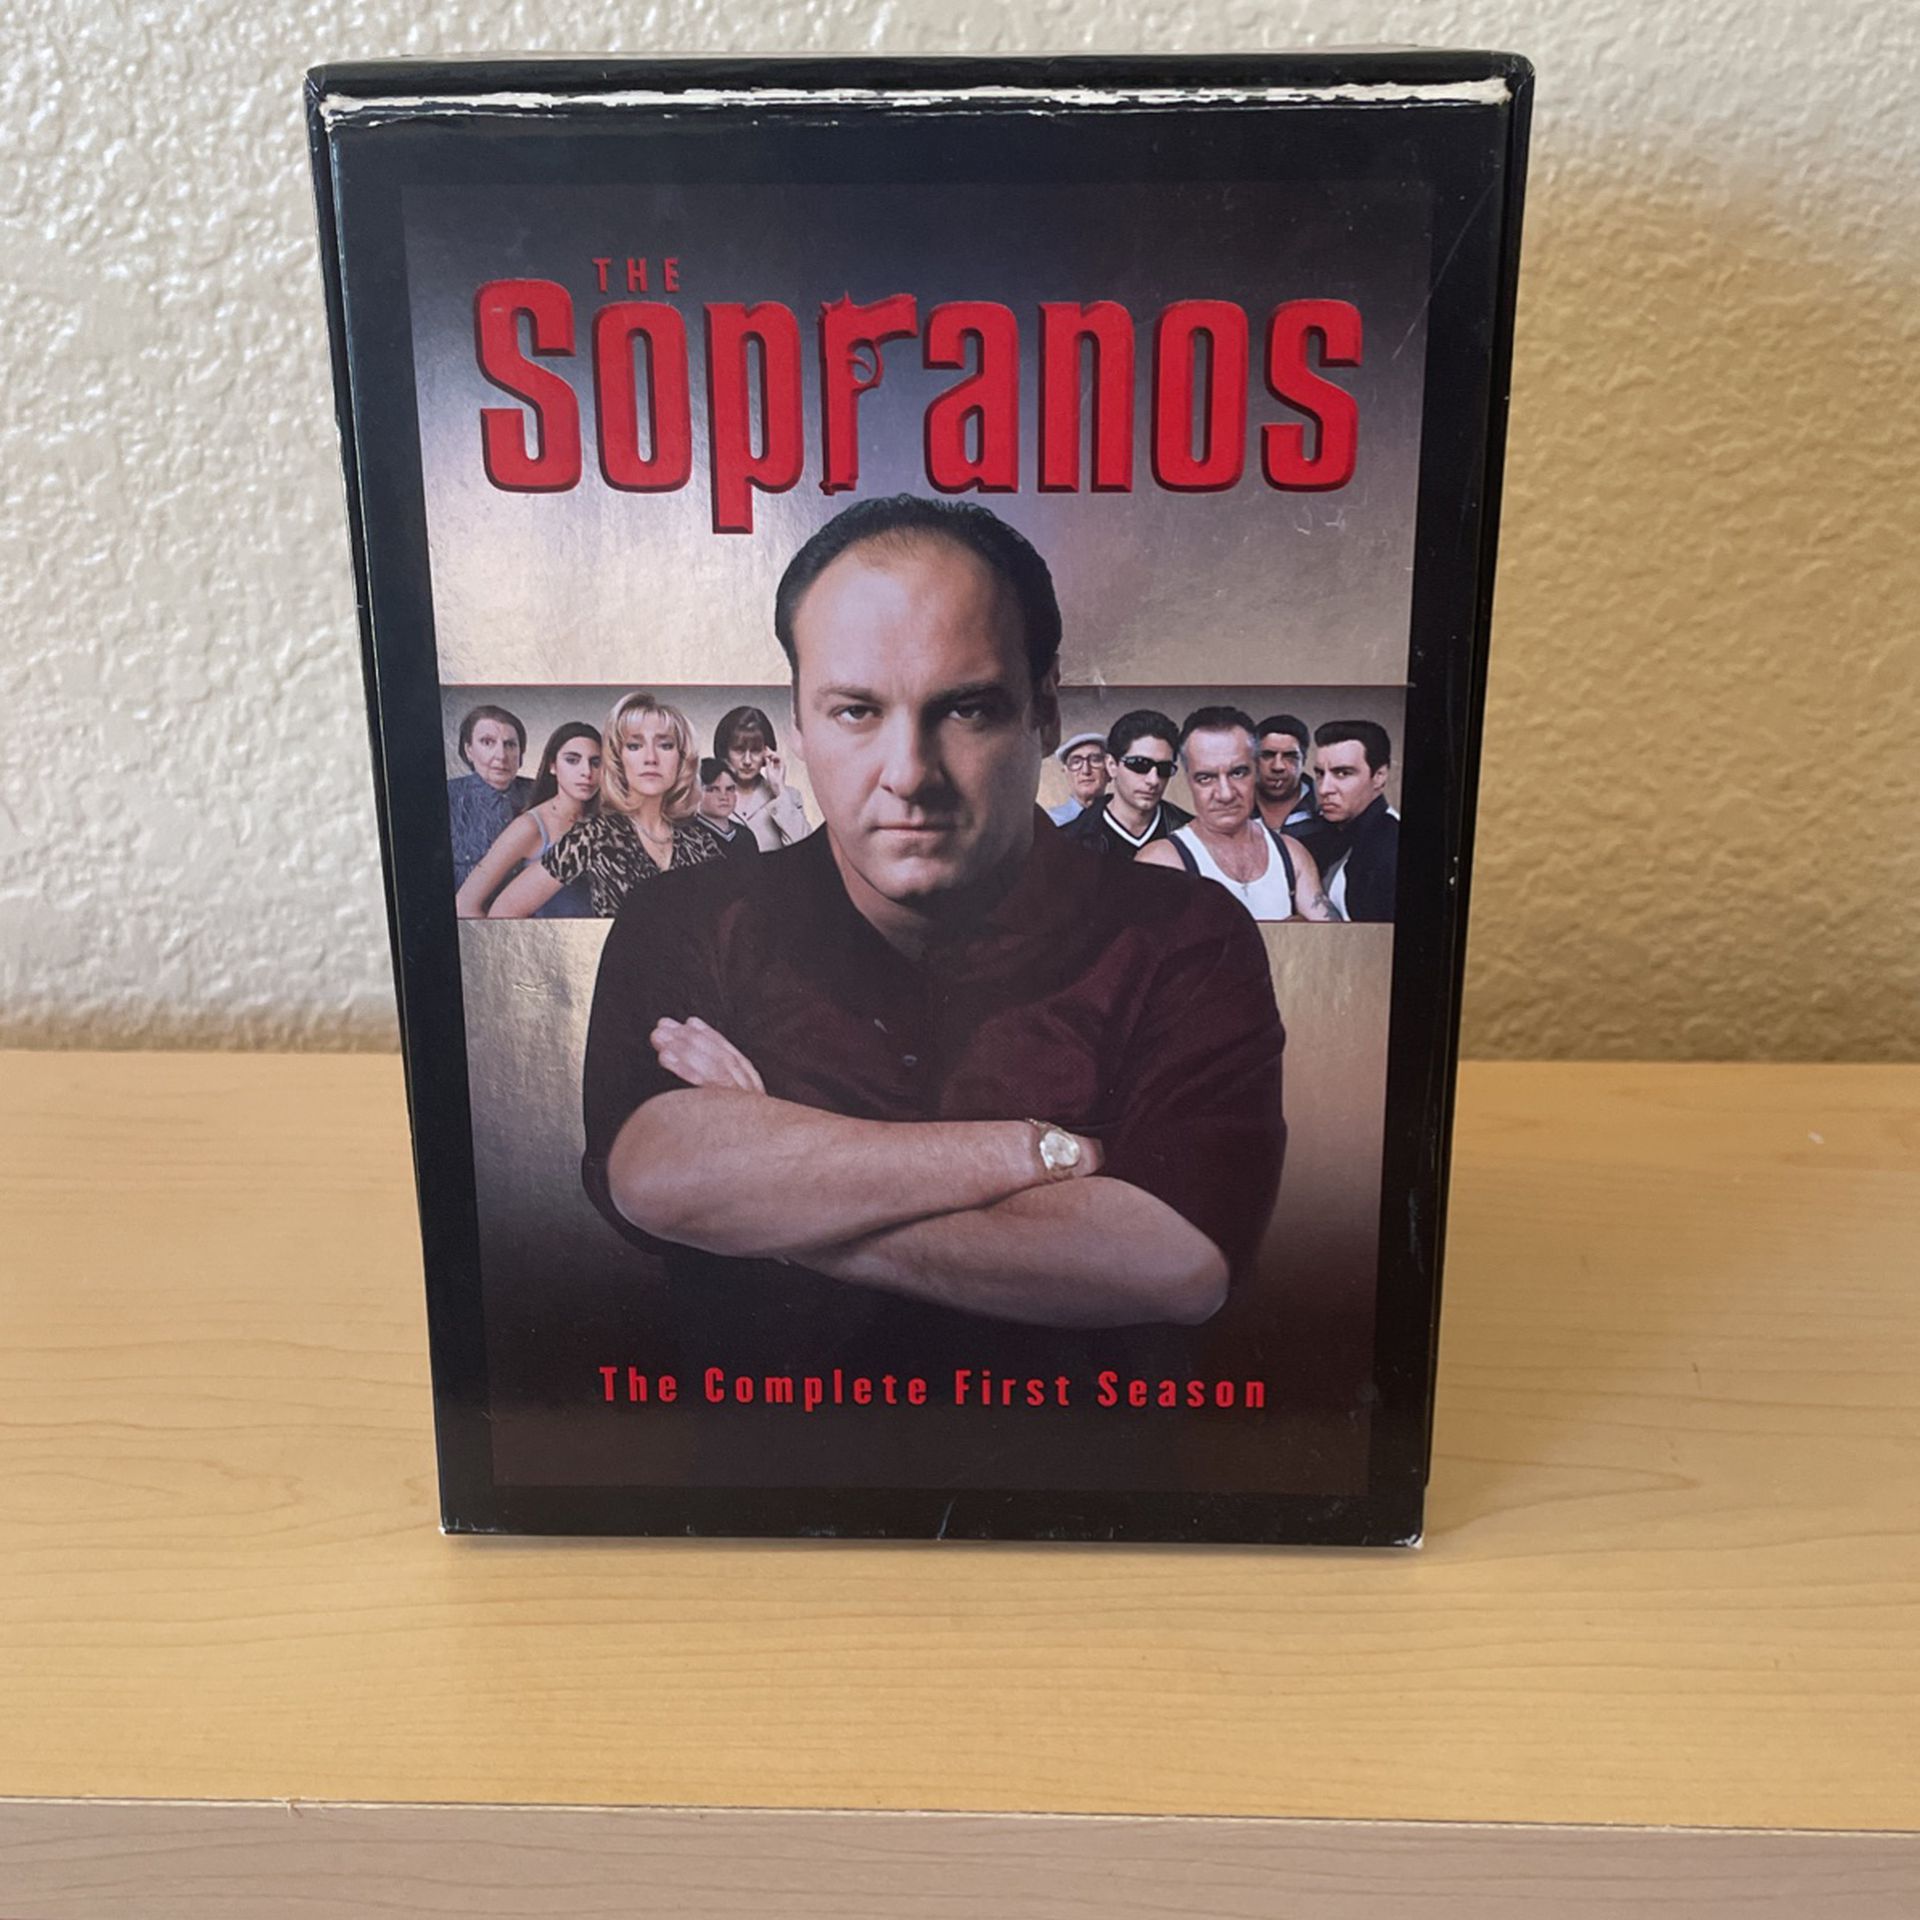 Sopranos first season VHS